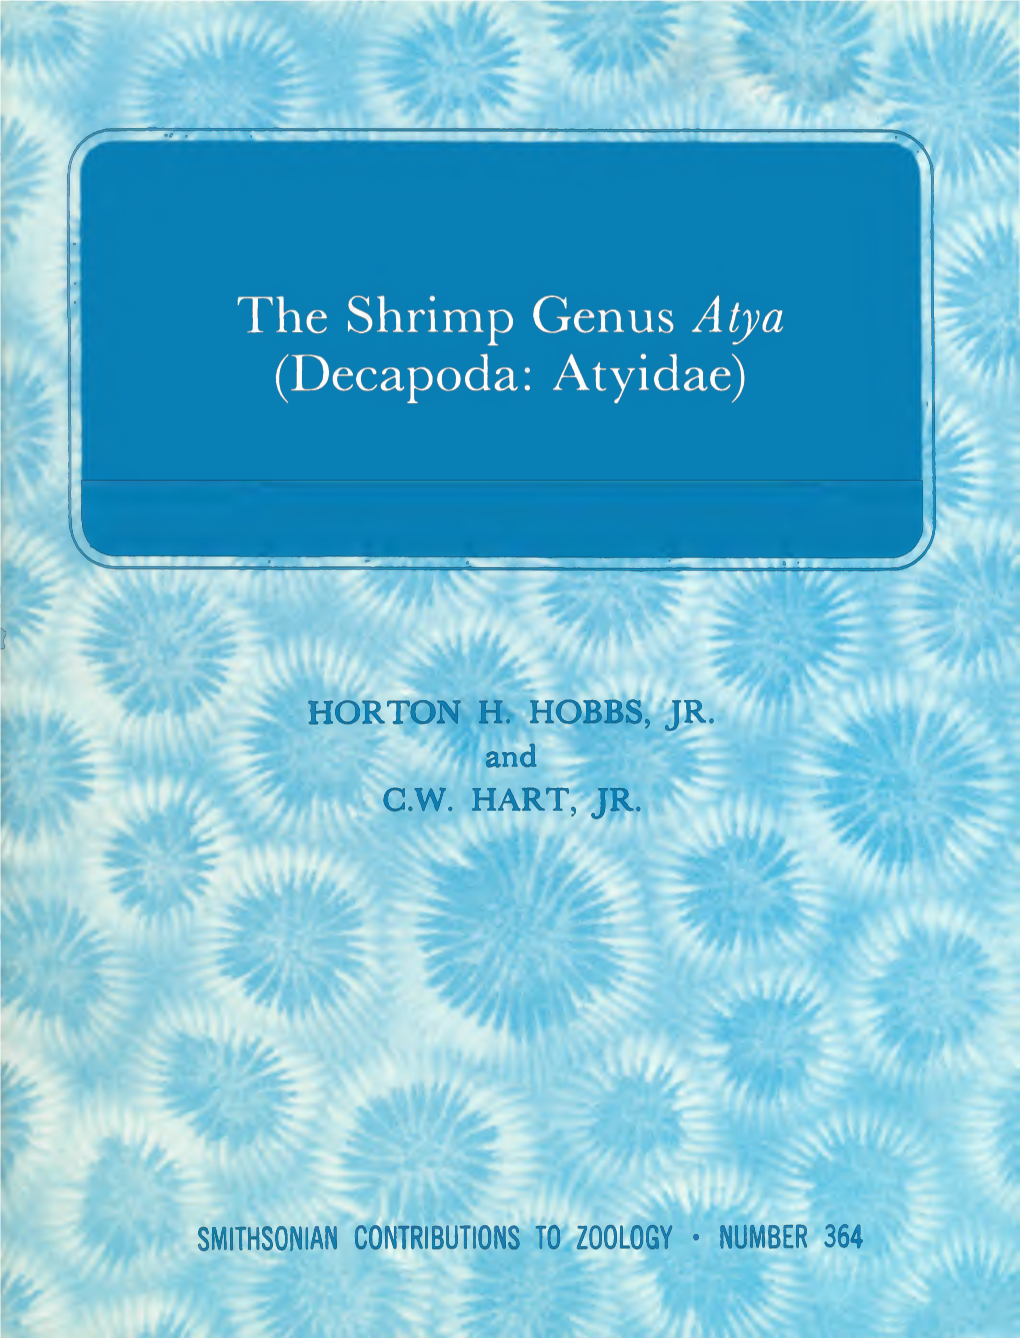 The Shrimp Genus Atya (Decapoda: Atyidae)